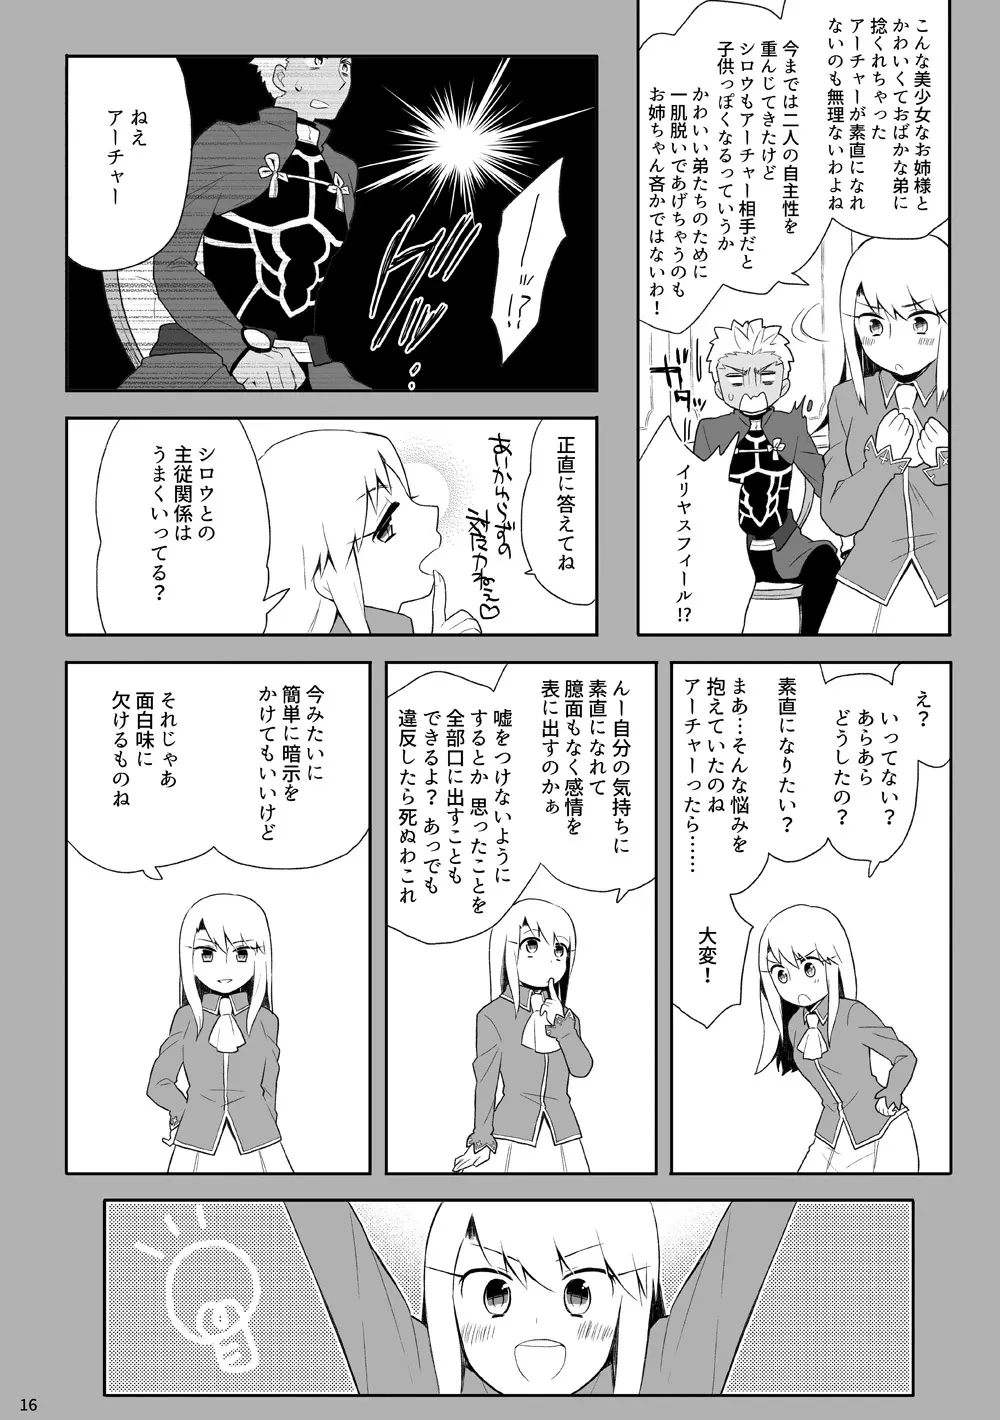 弓士本 - page15